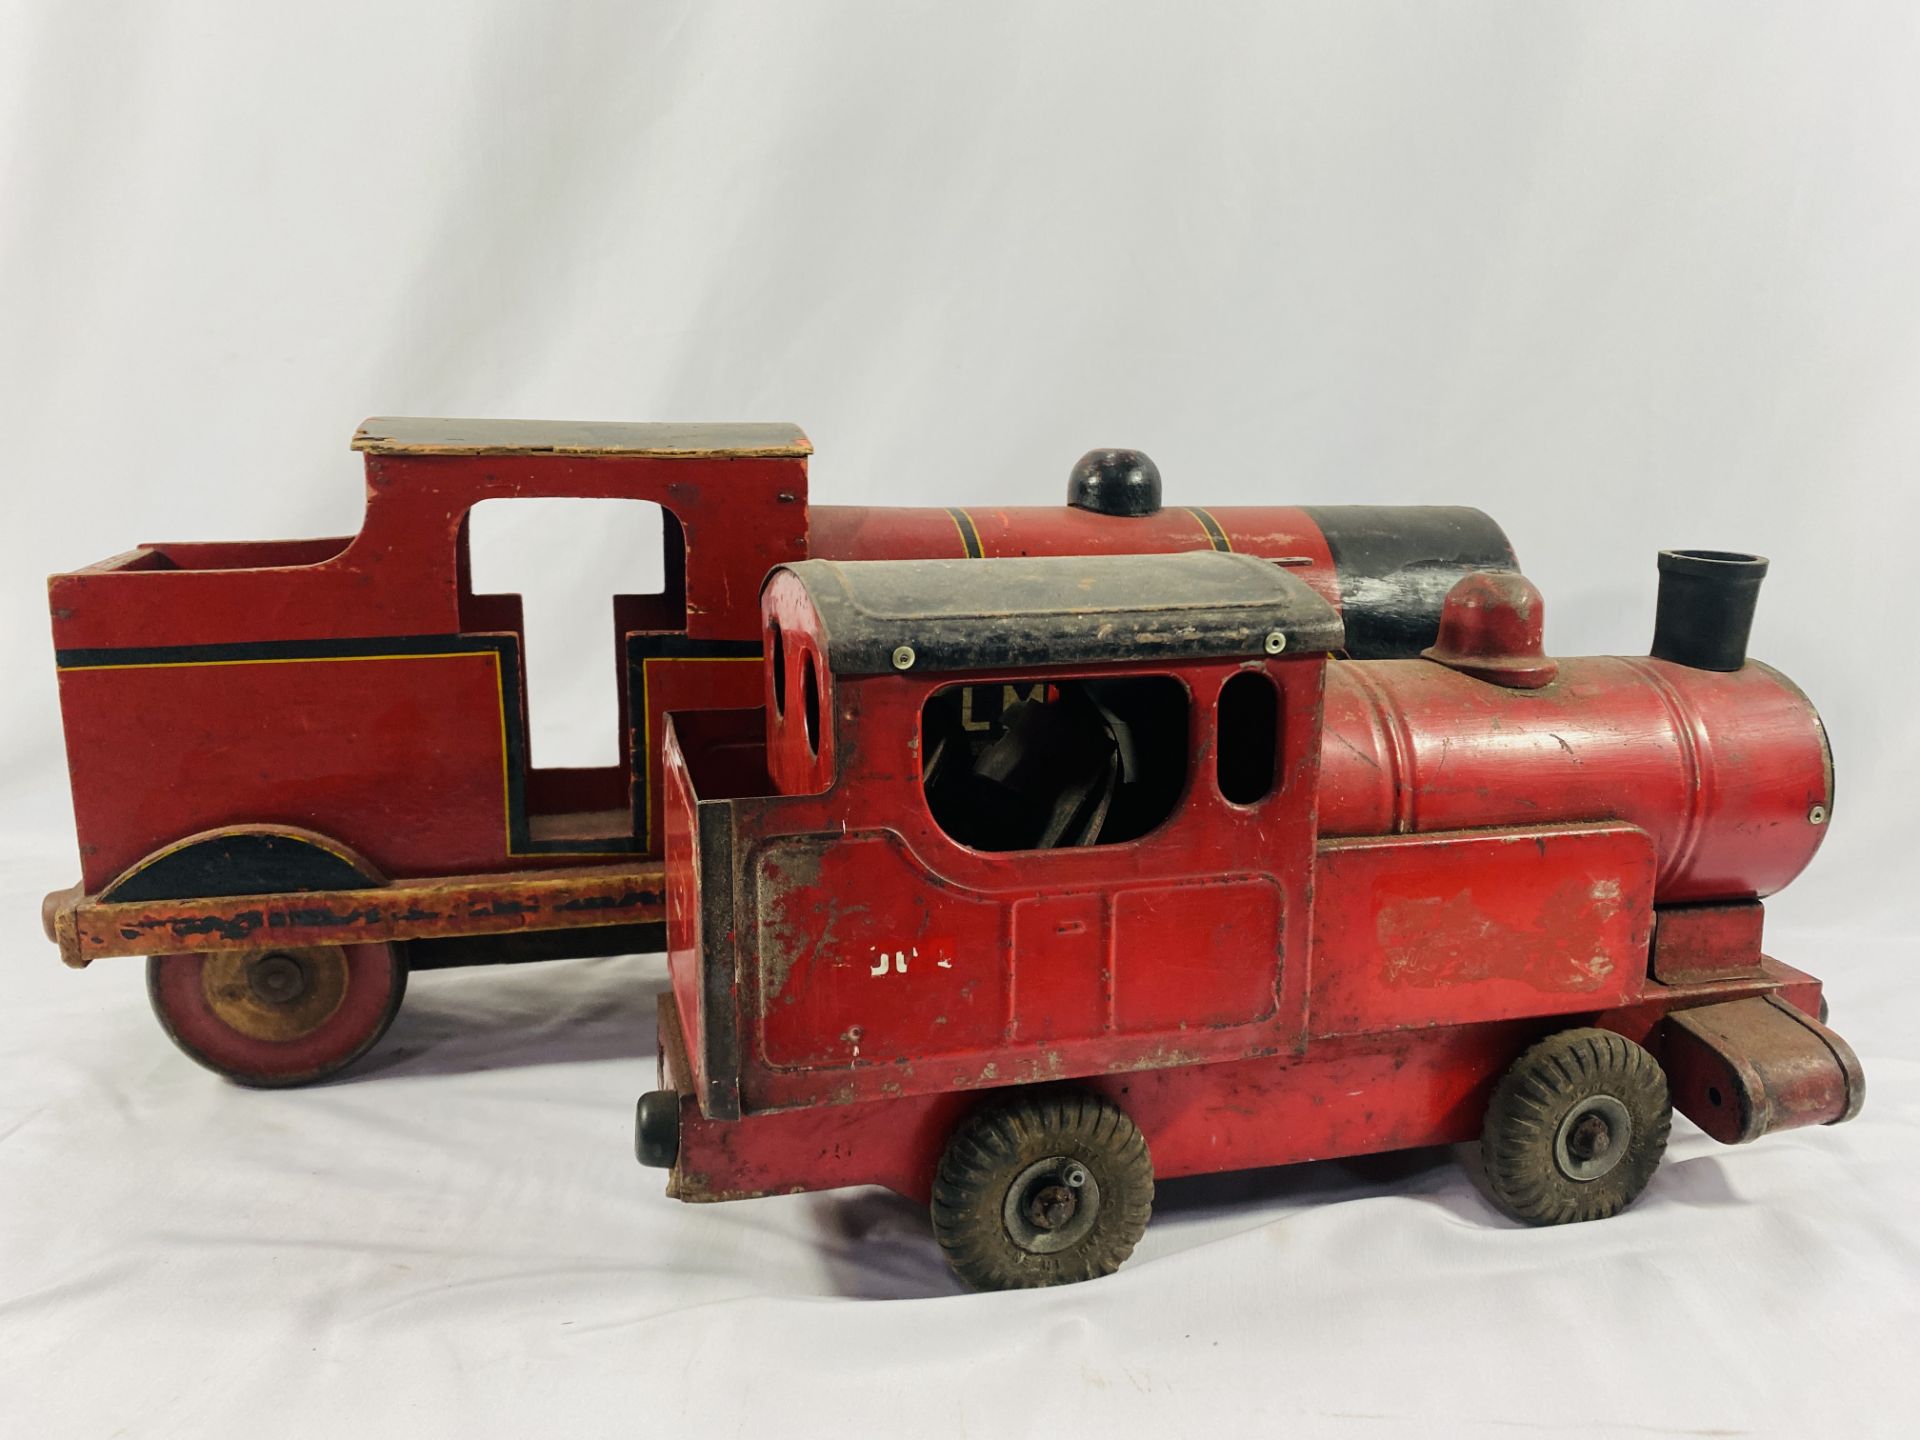 A wooden toy locomotive, a metal toy locomotive